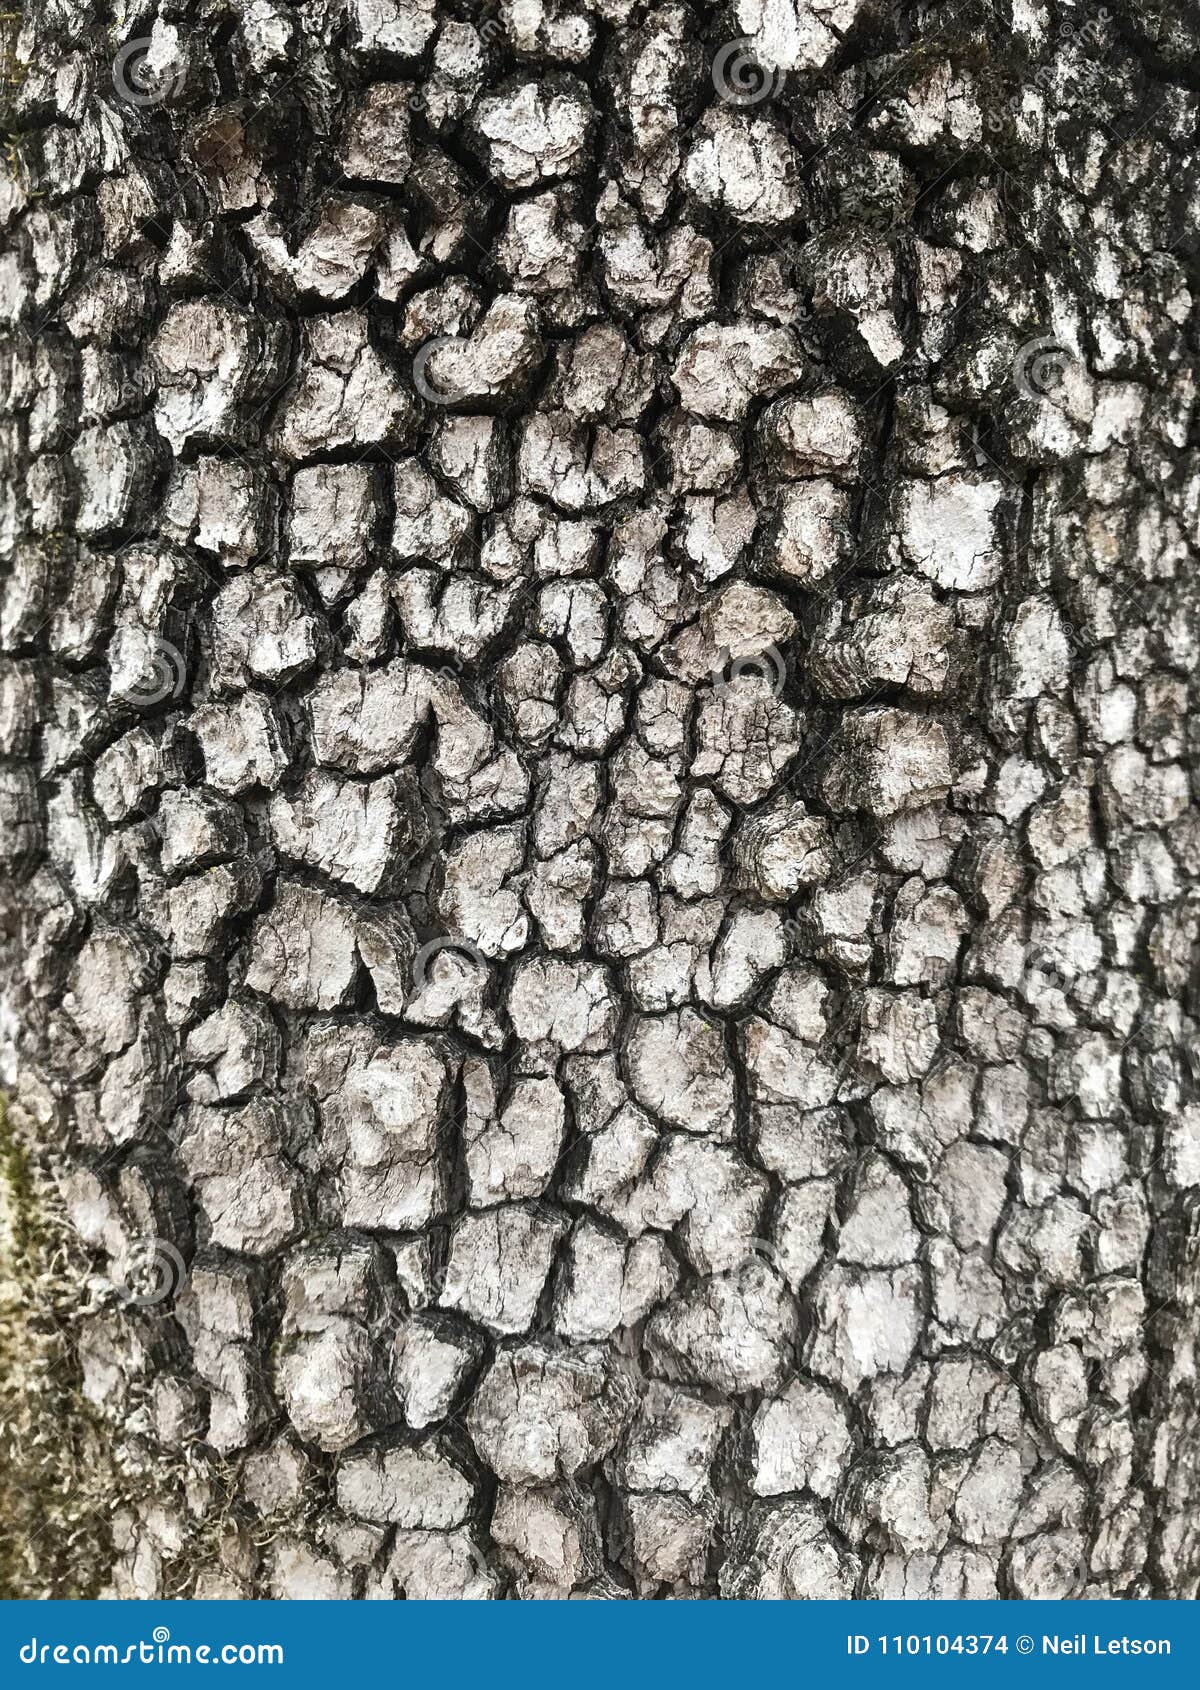 tree identification. bark. flowering dogwood